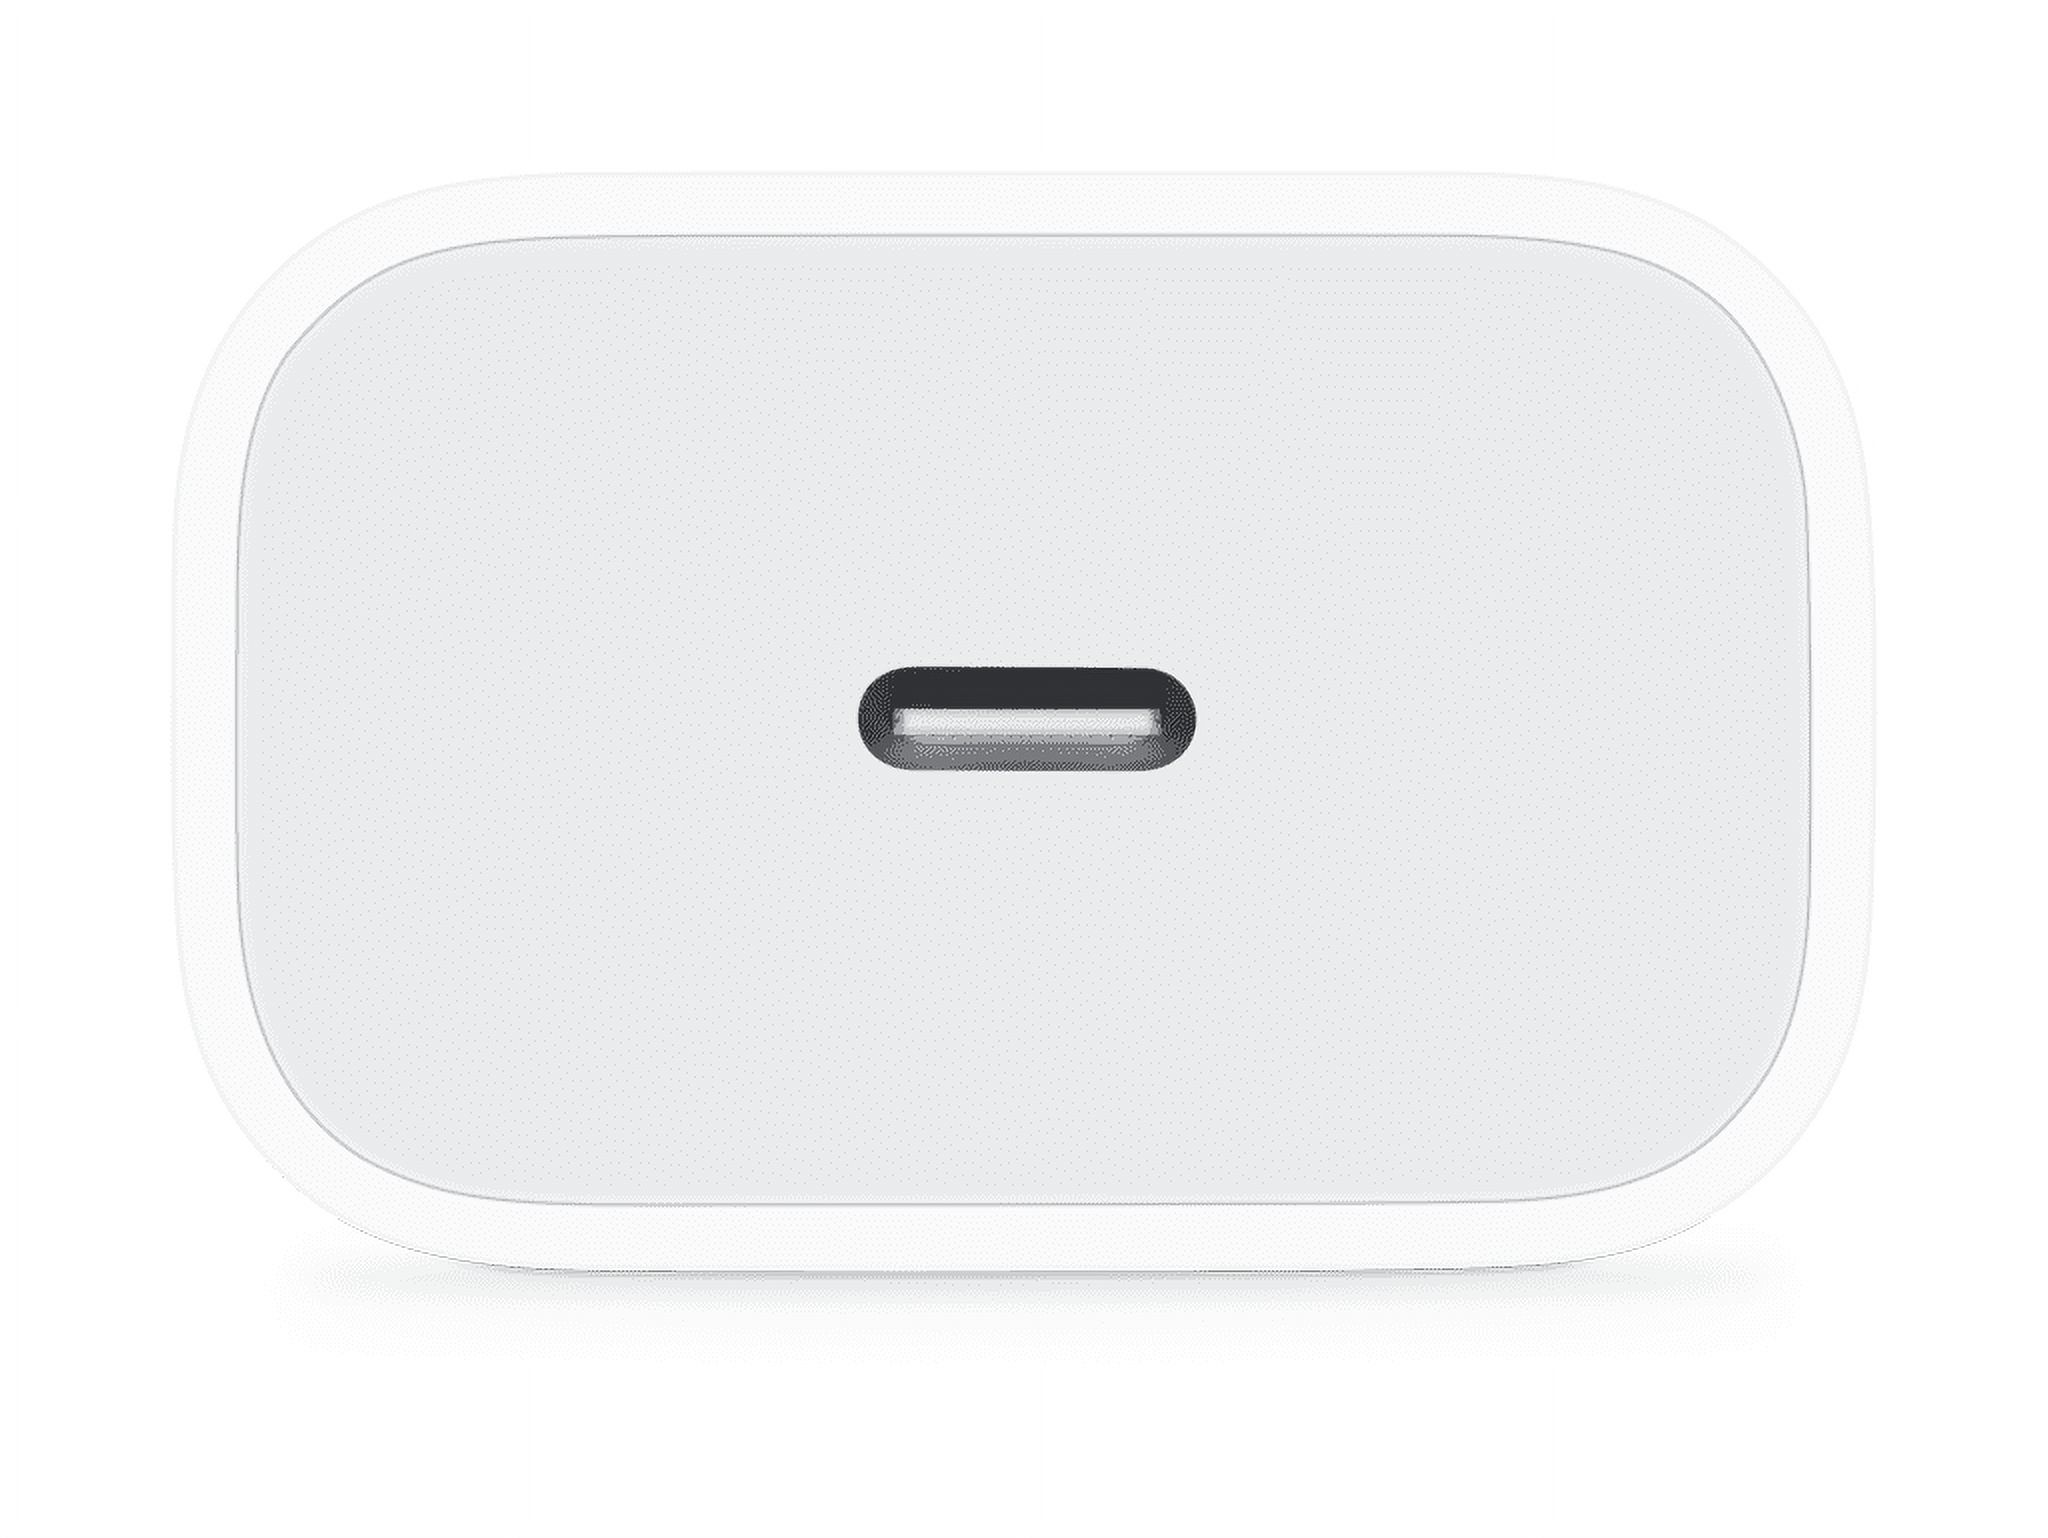 Apple 20W USB-C Power Adapter, White - image 2 of 2